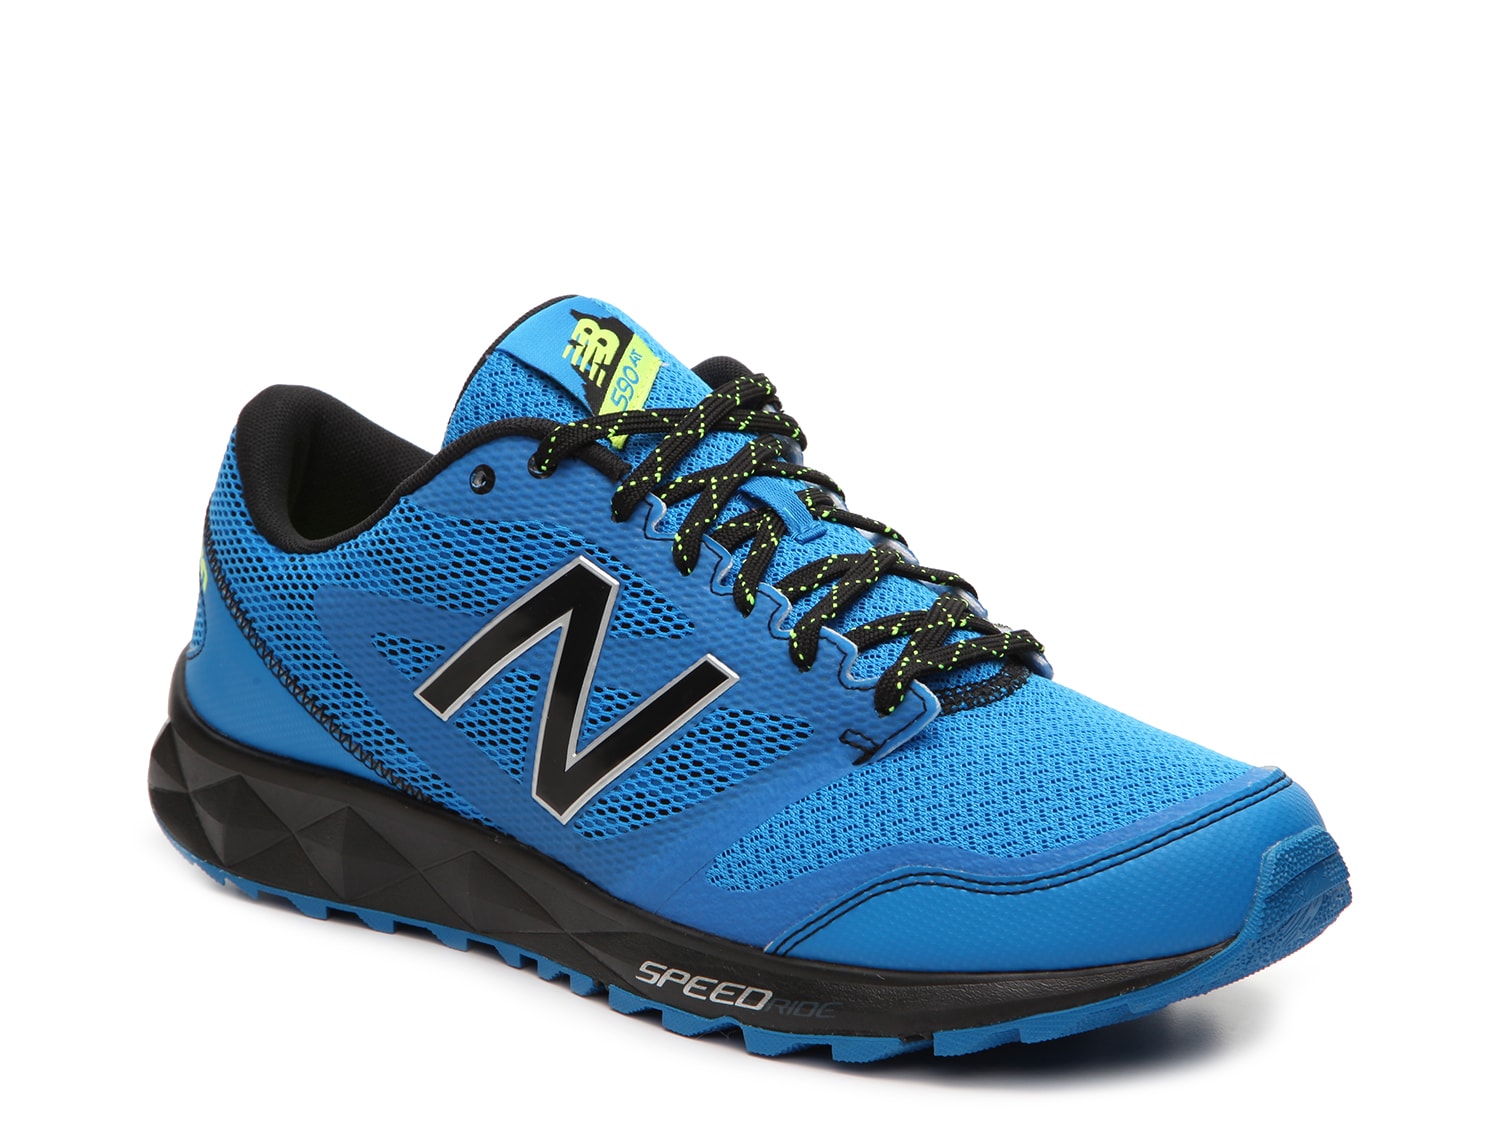 New Balance 590 AT Lightweight Trail Running Shoe - Men's | DSW